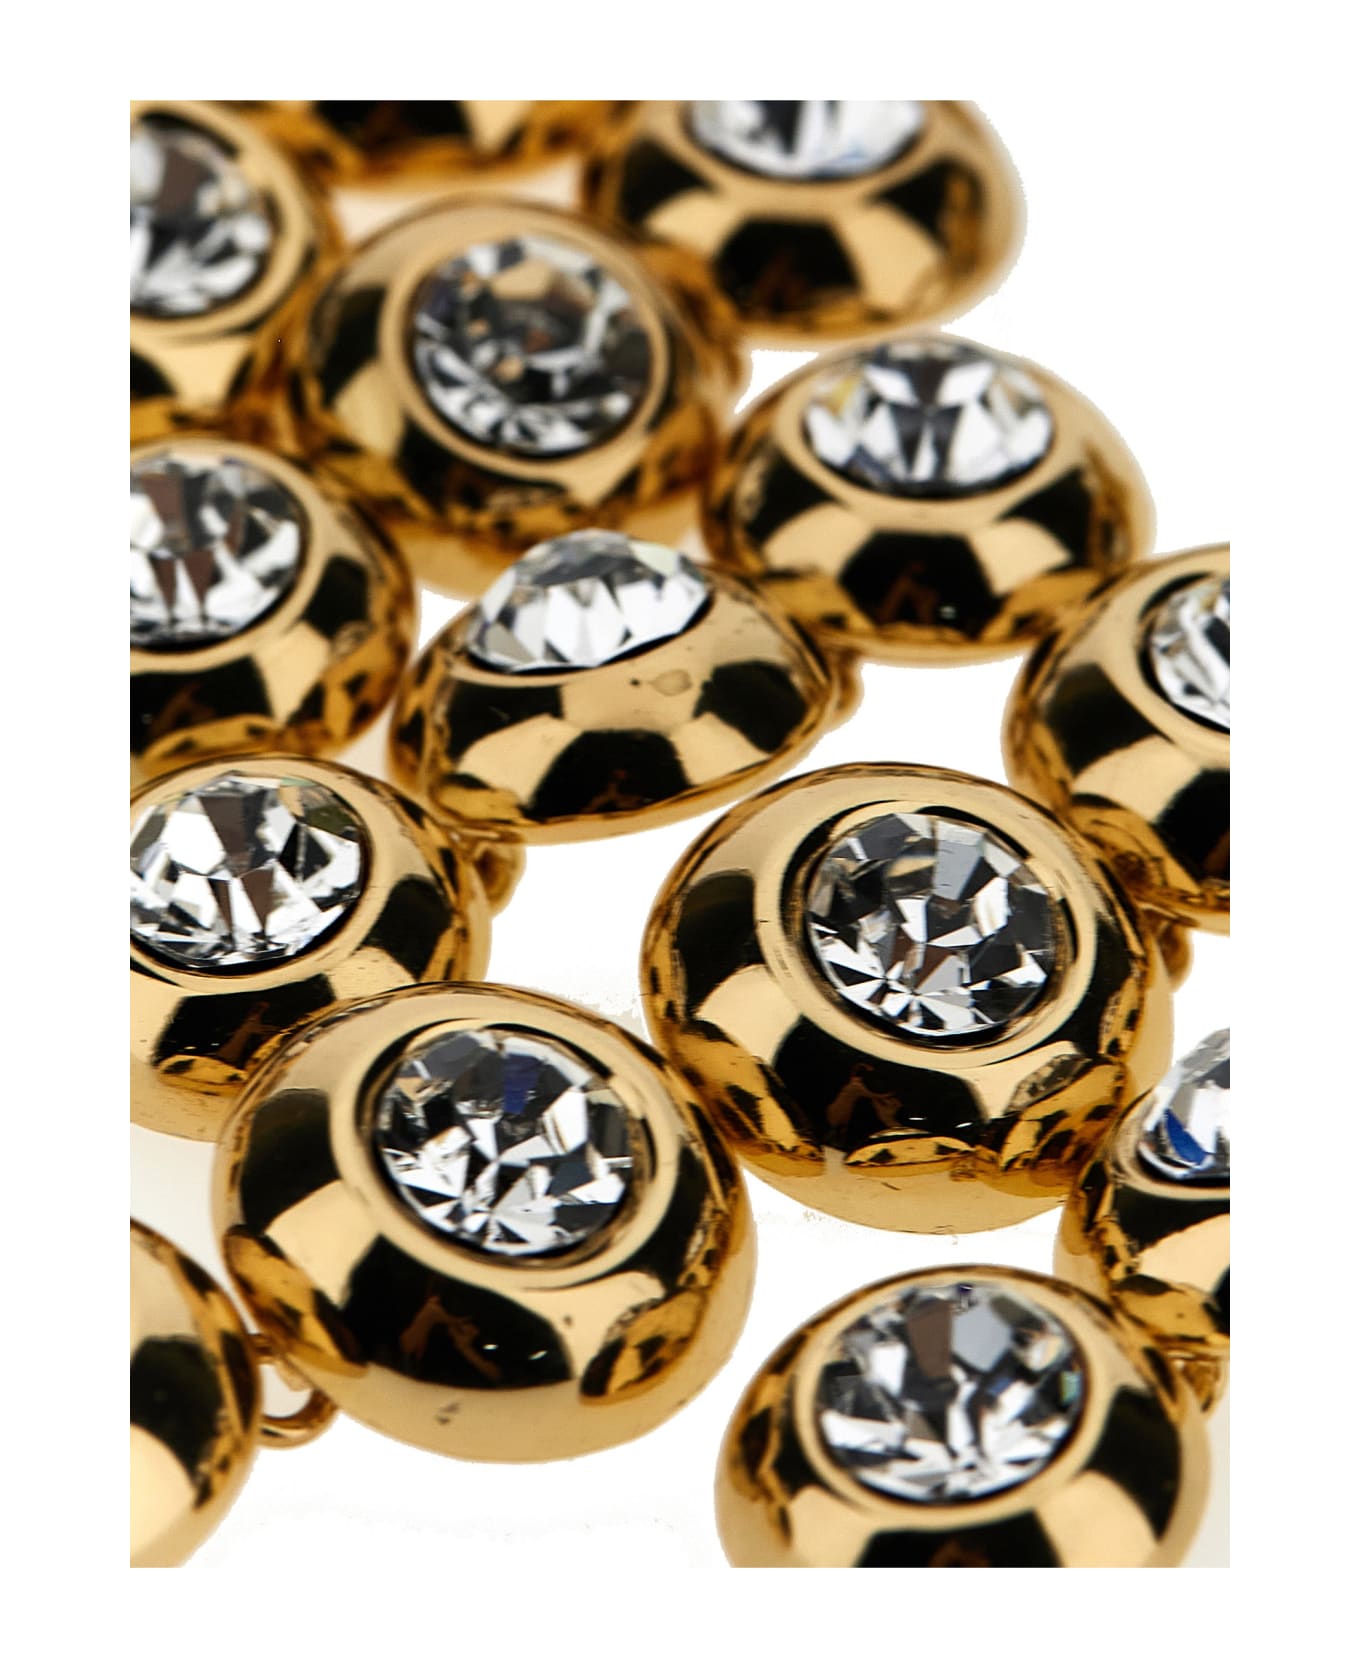 AREA 'crystal Chandelier' Earrings - Gold ジュエリー